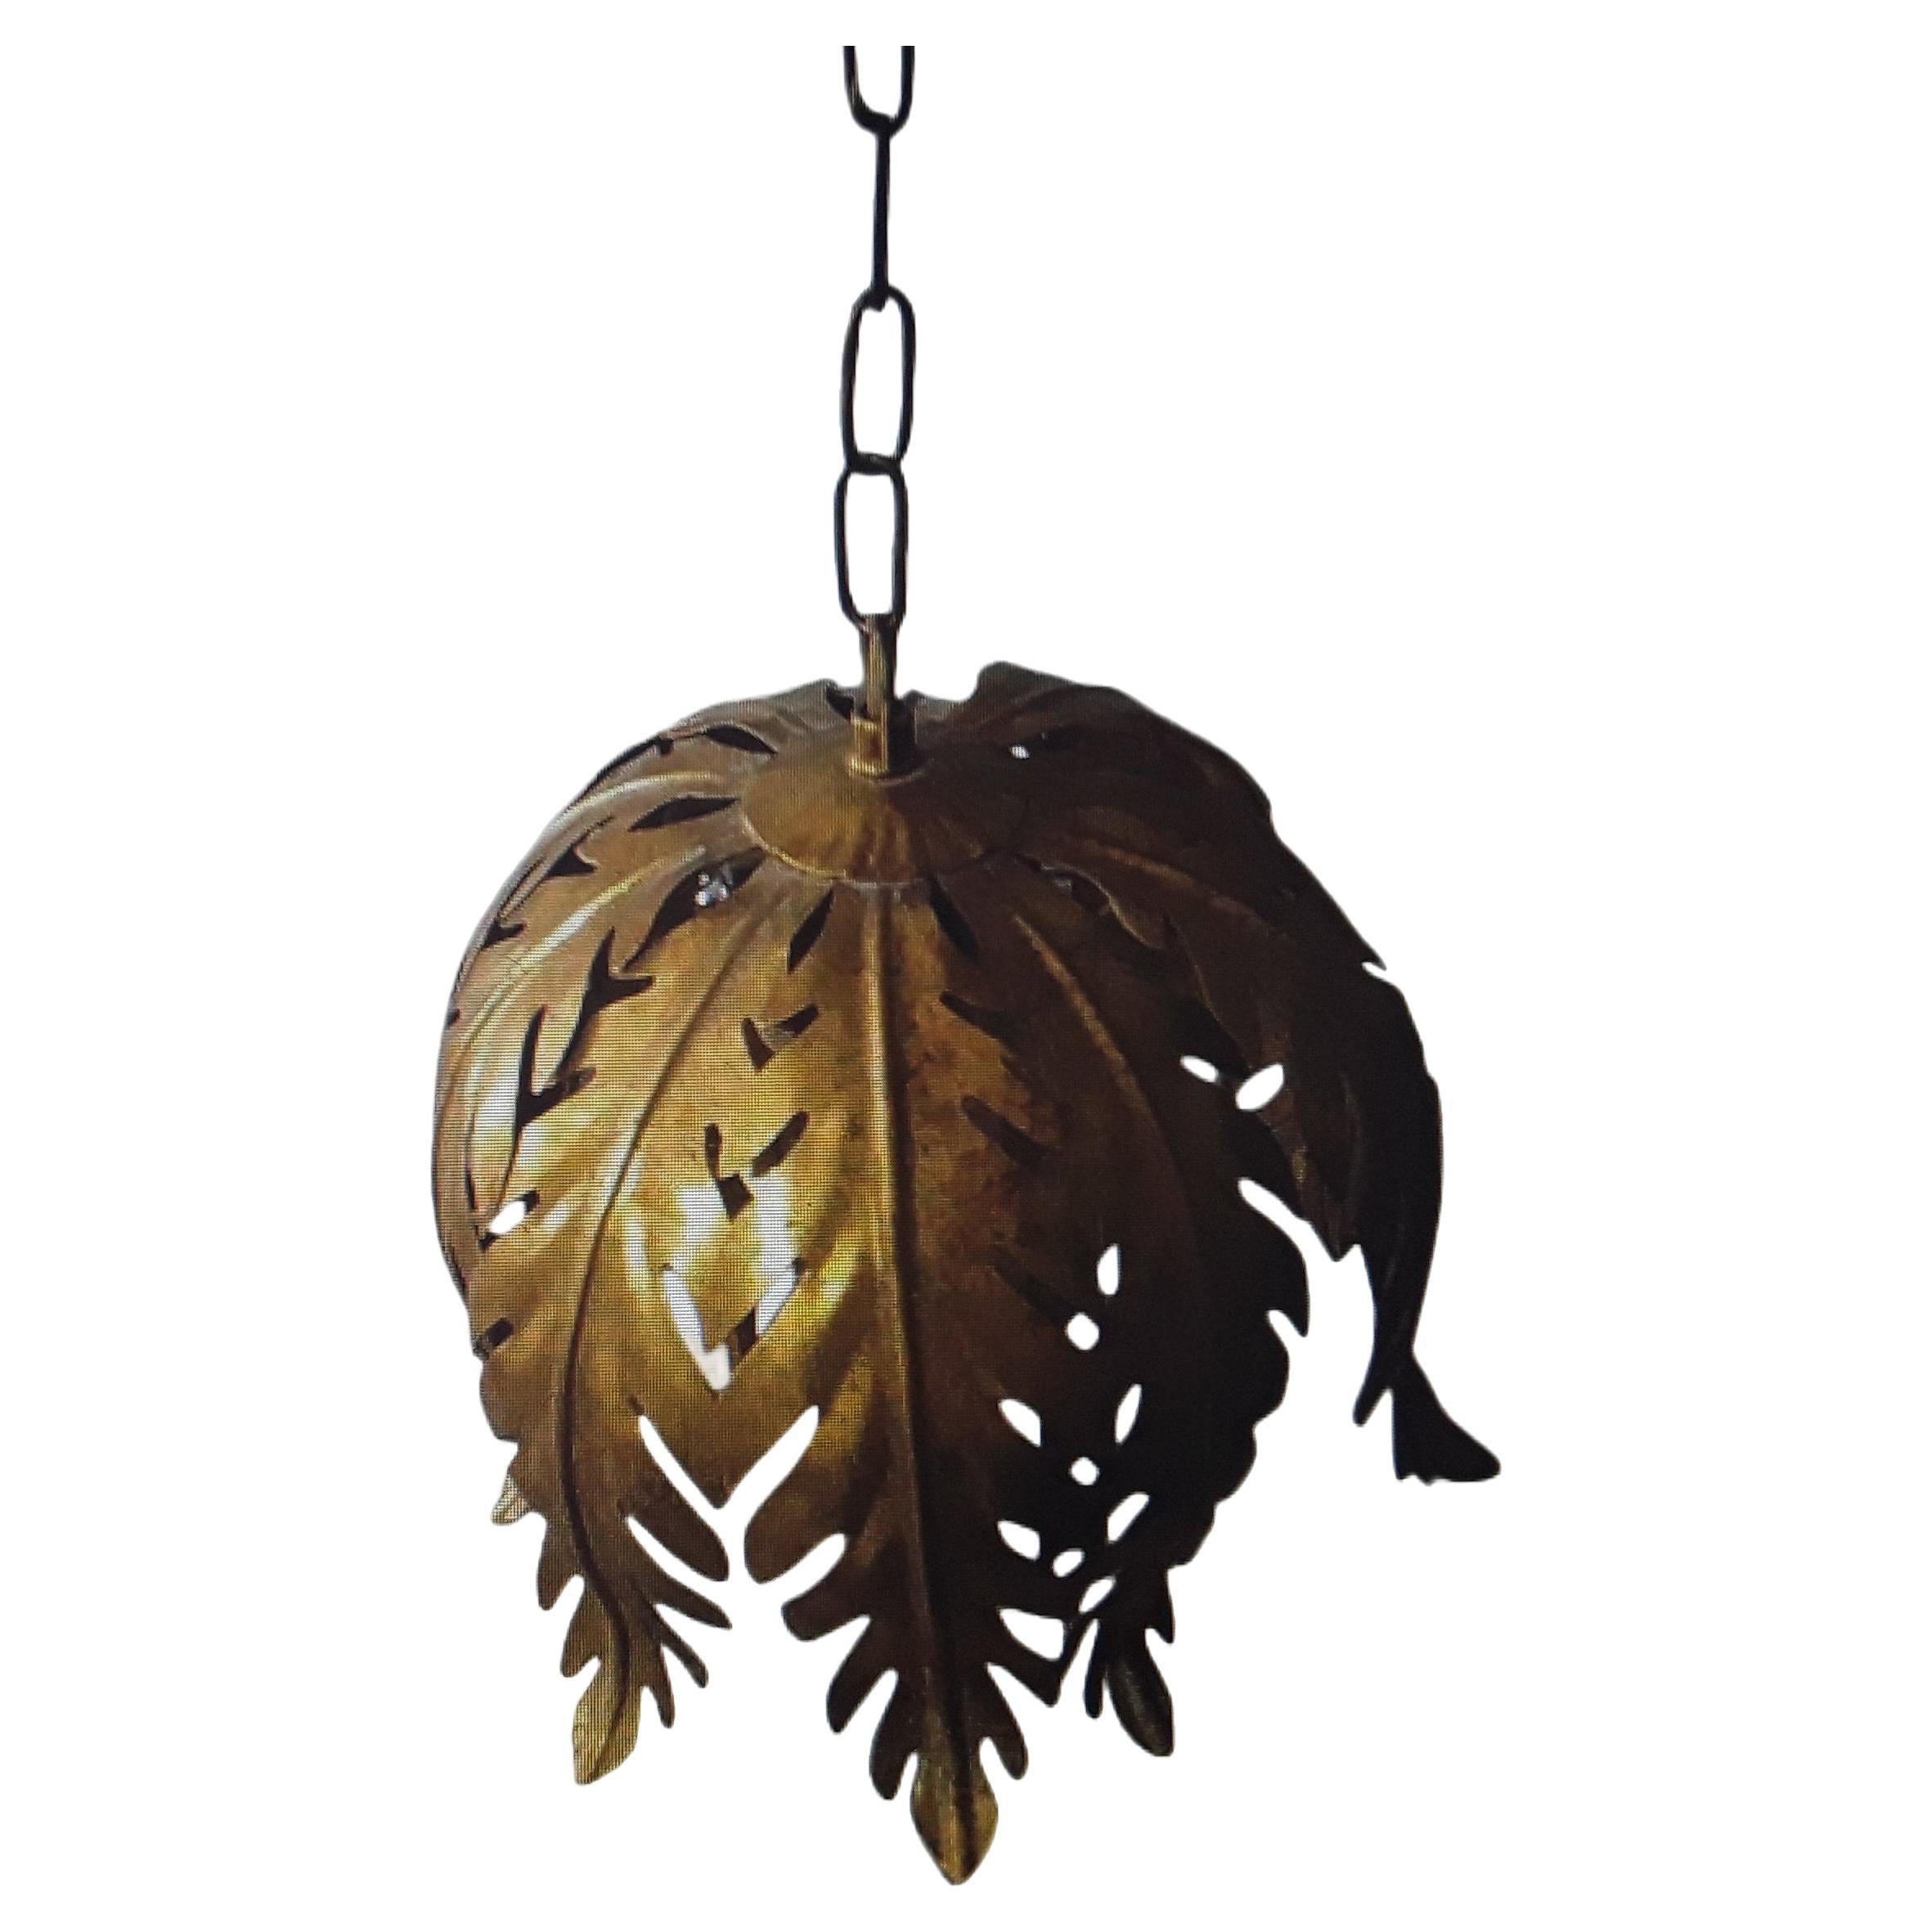 1960 Mid Century Dore "Feuillage" Palm Ceiling Pendant/Chandelier att. Hans Kogl